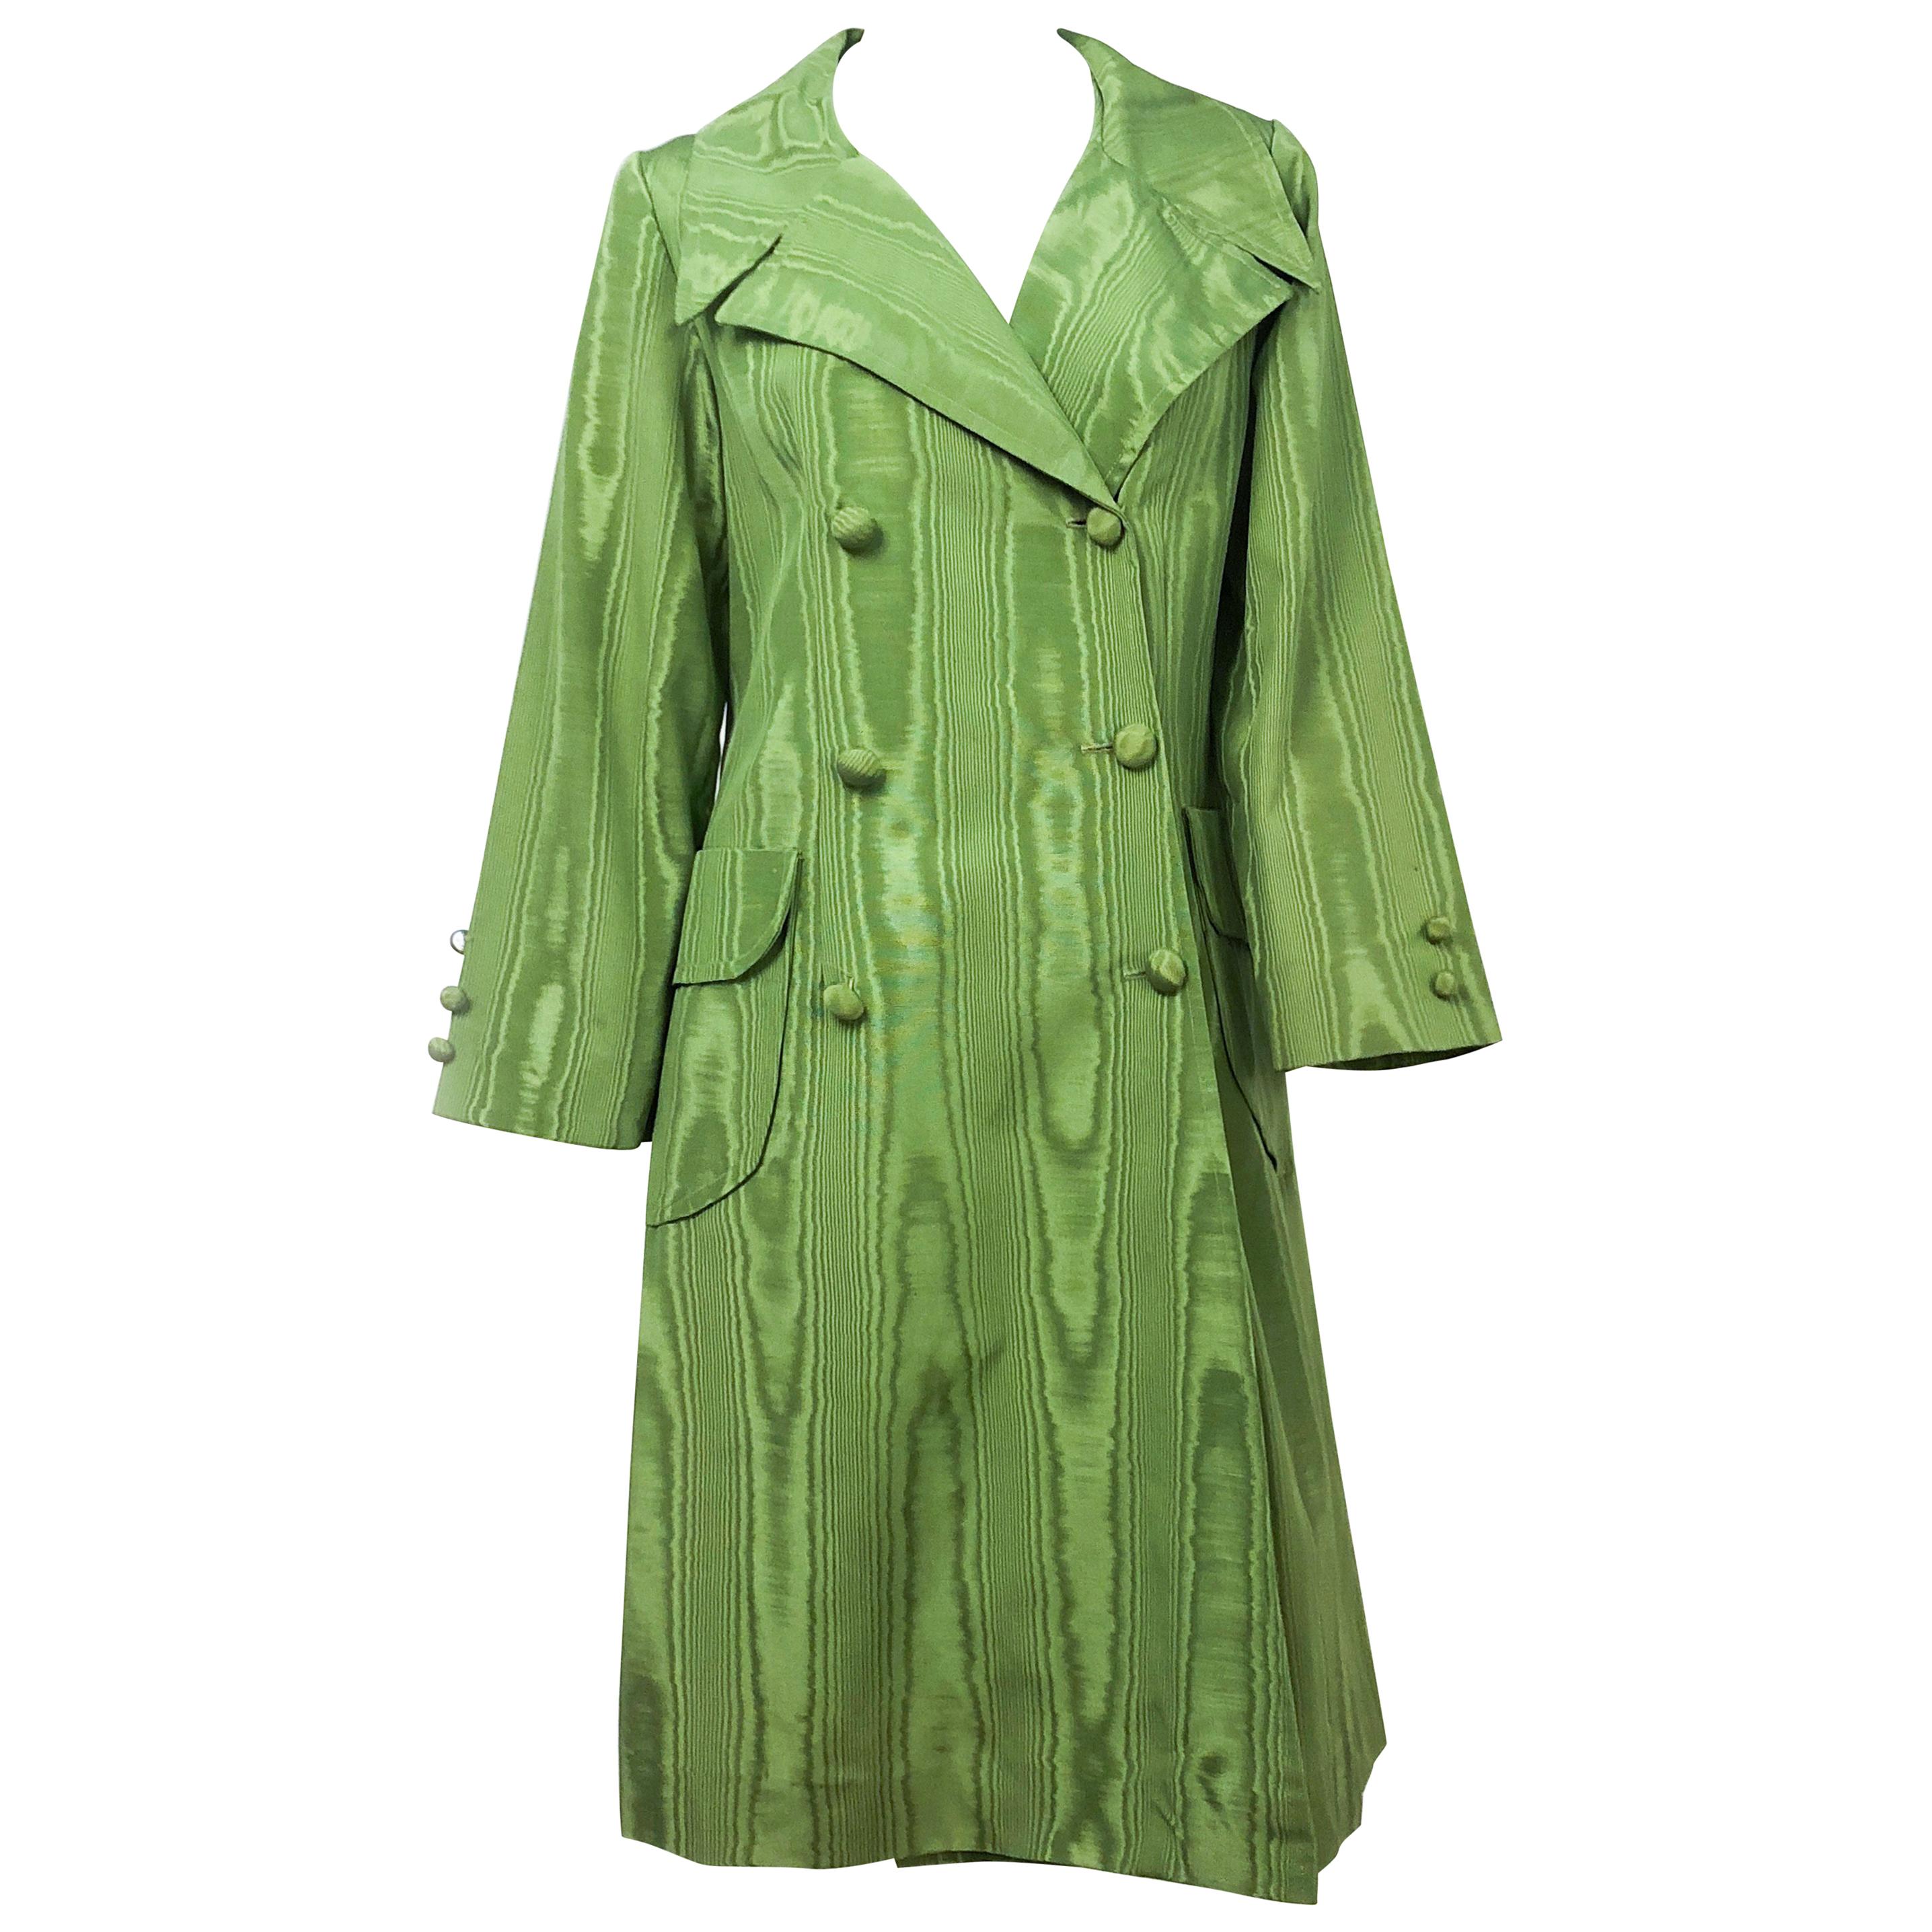 1970s Avocado Green Moire Coat